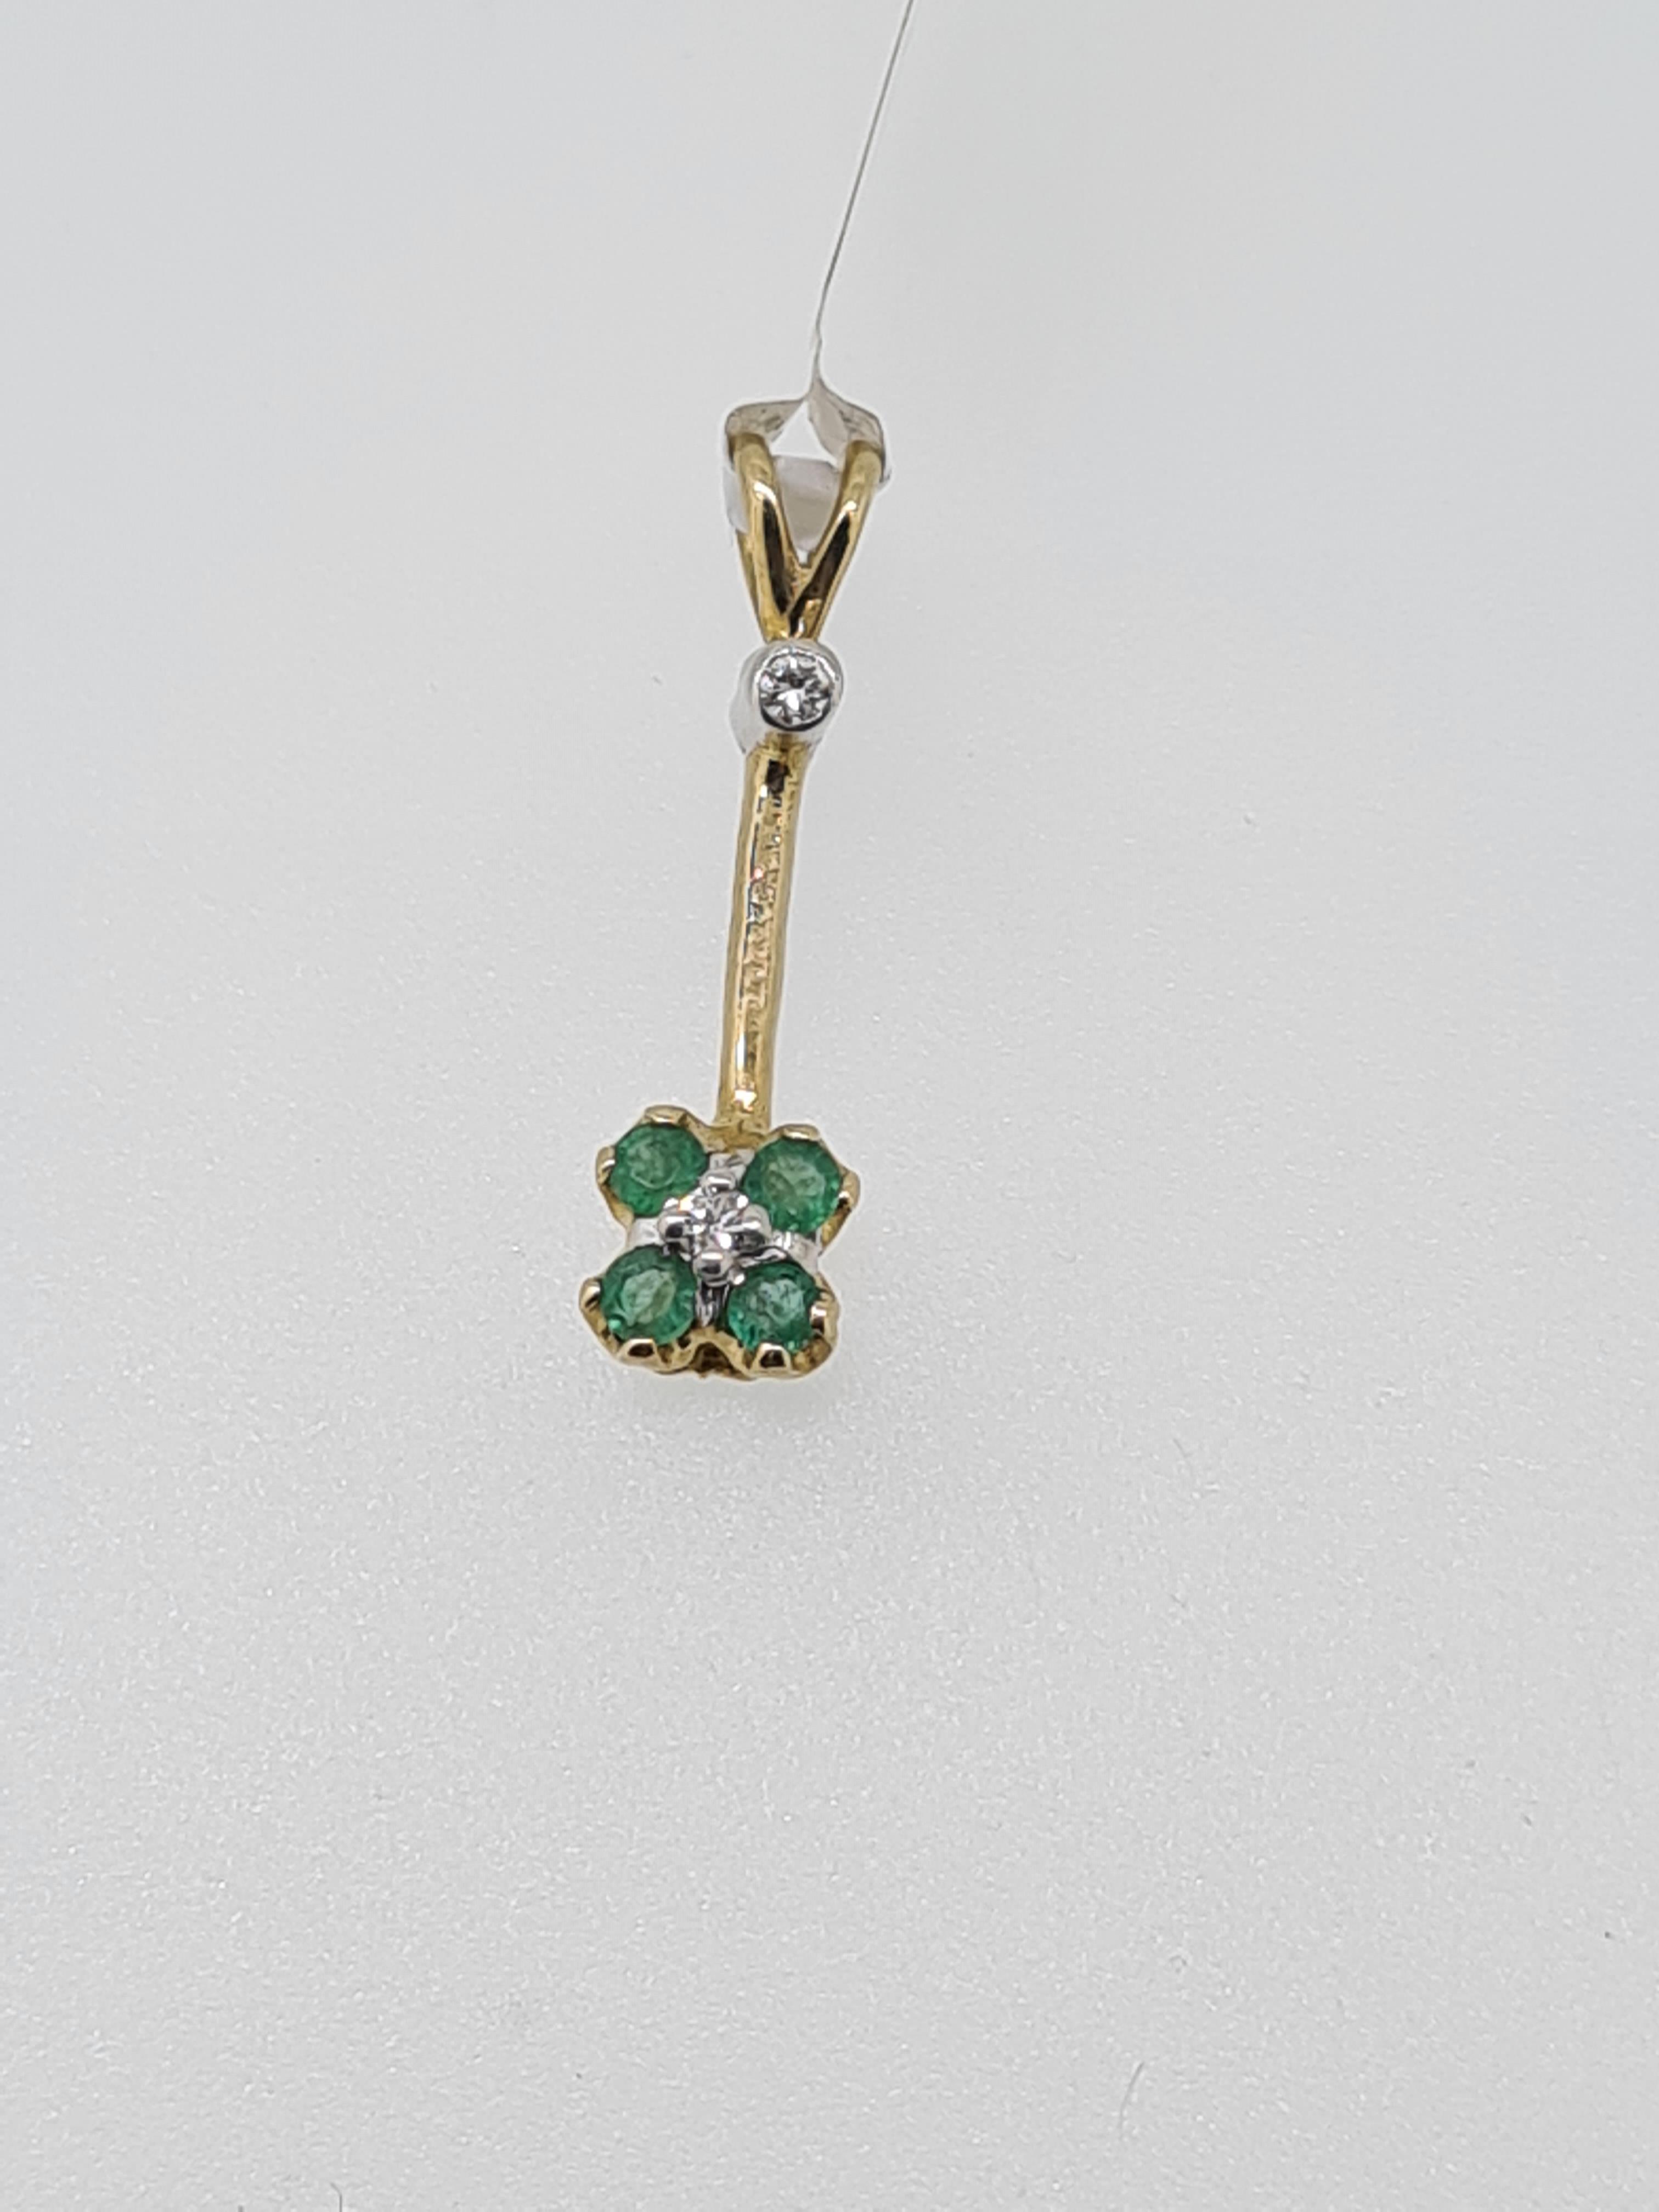 9ct hallmark yellow gold emerald and diamond pendant